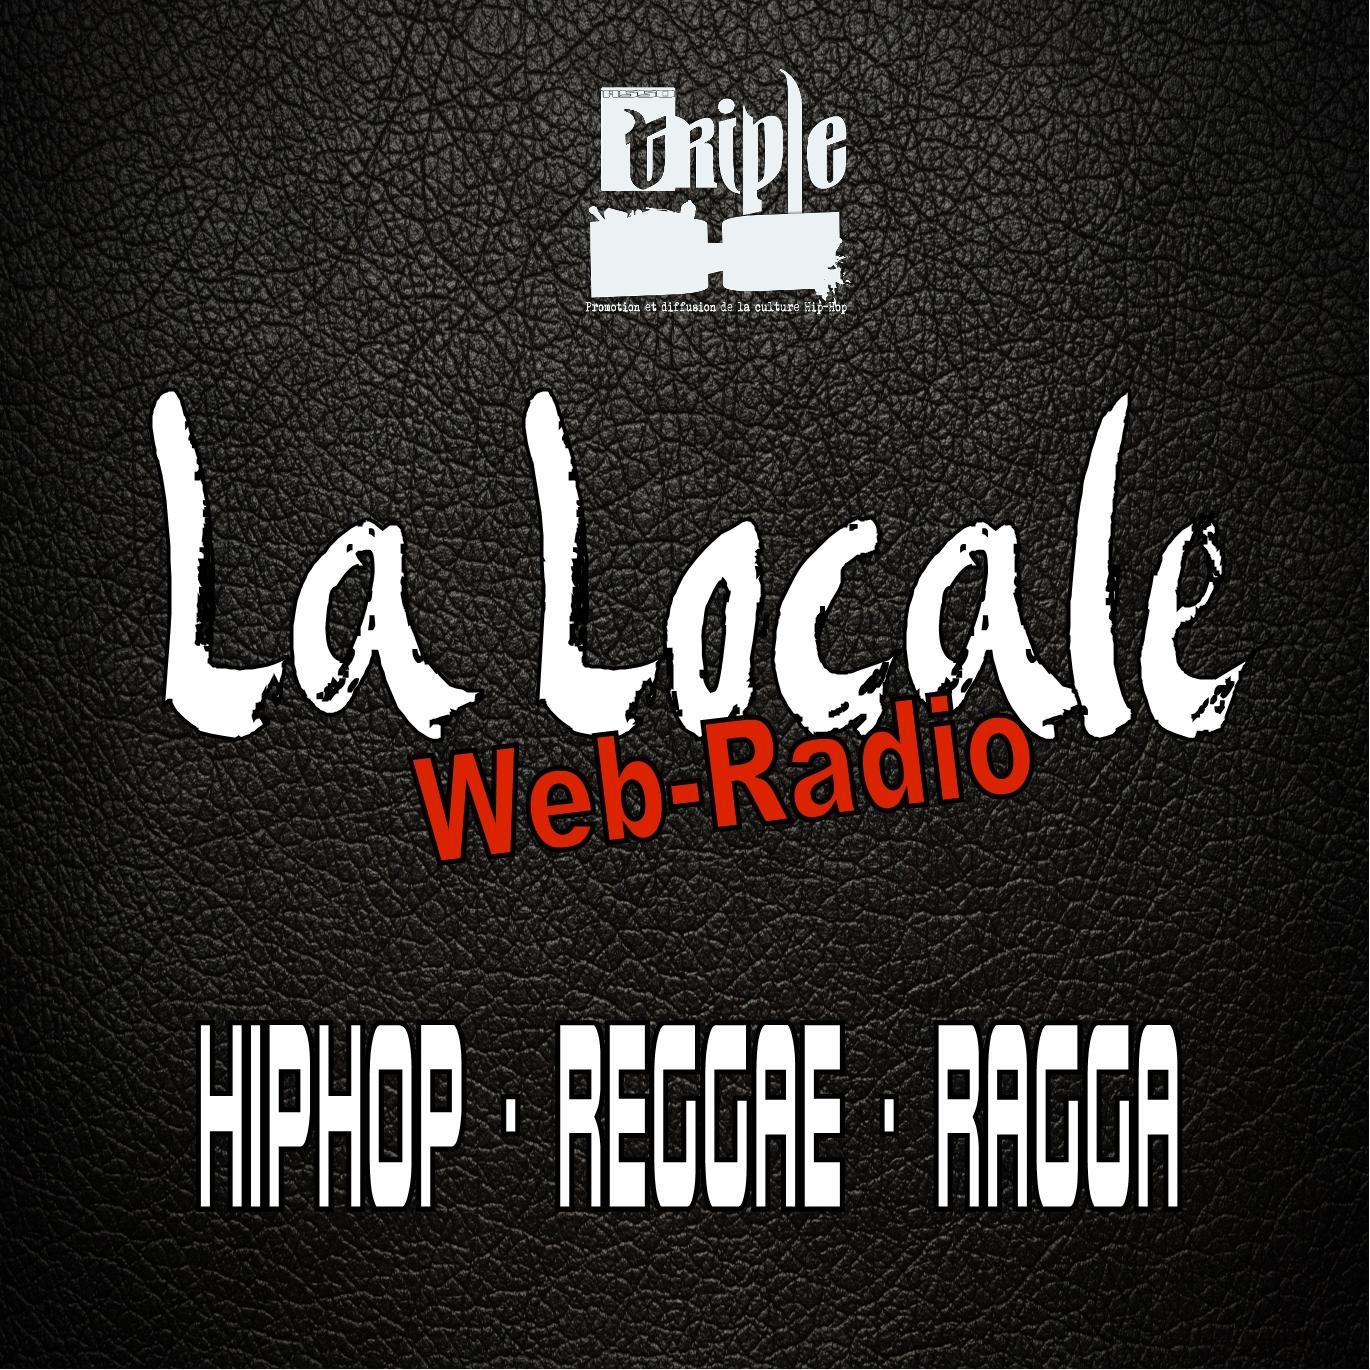 HipHop-Reggae-Ragga indé !!!